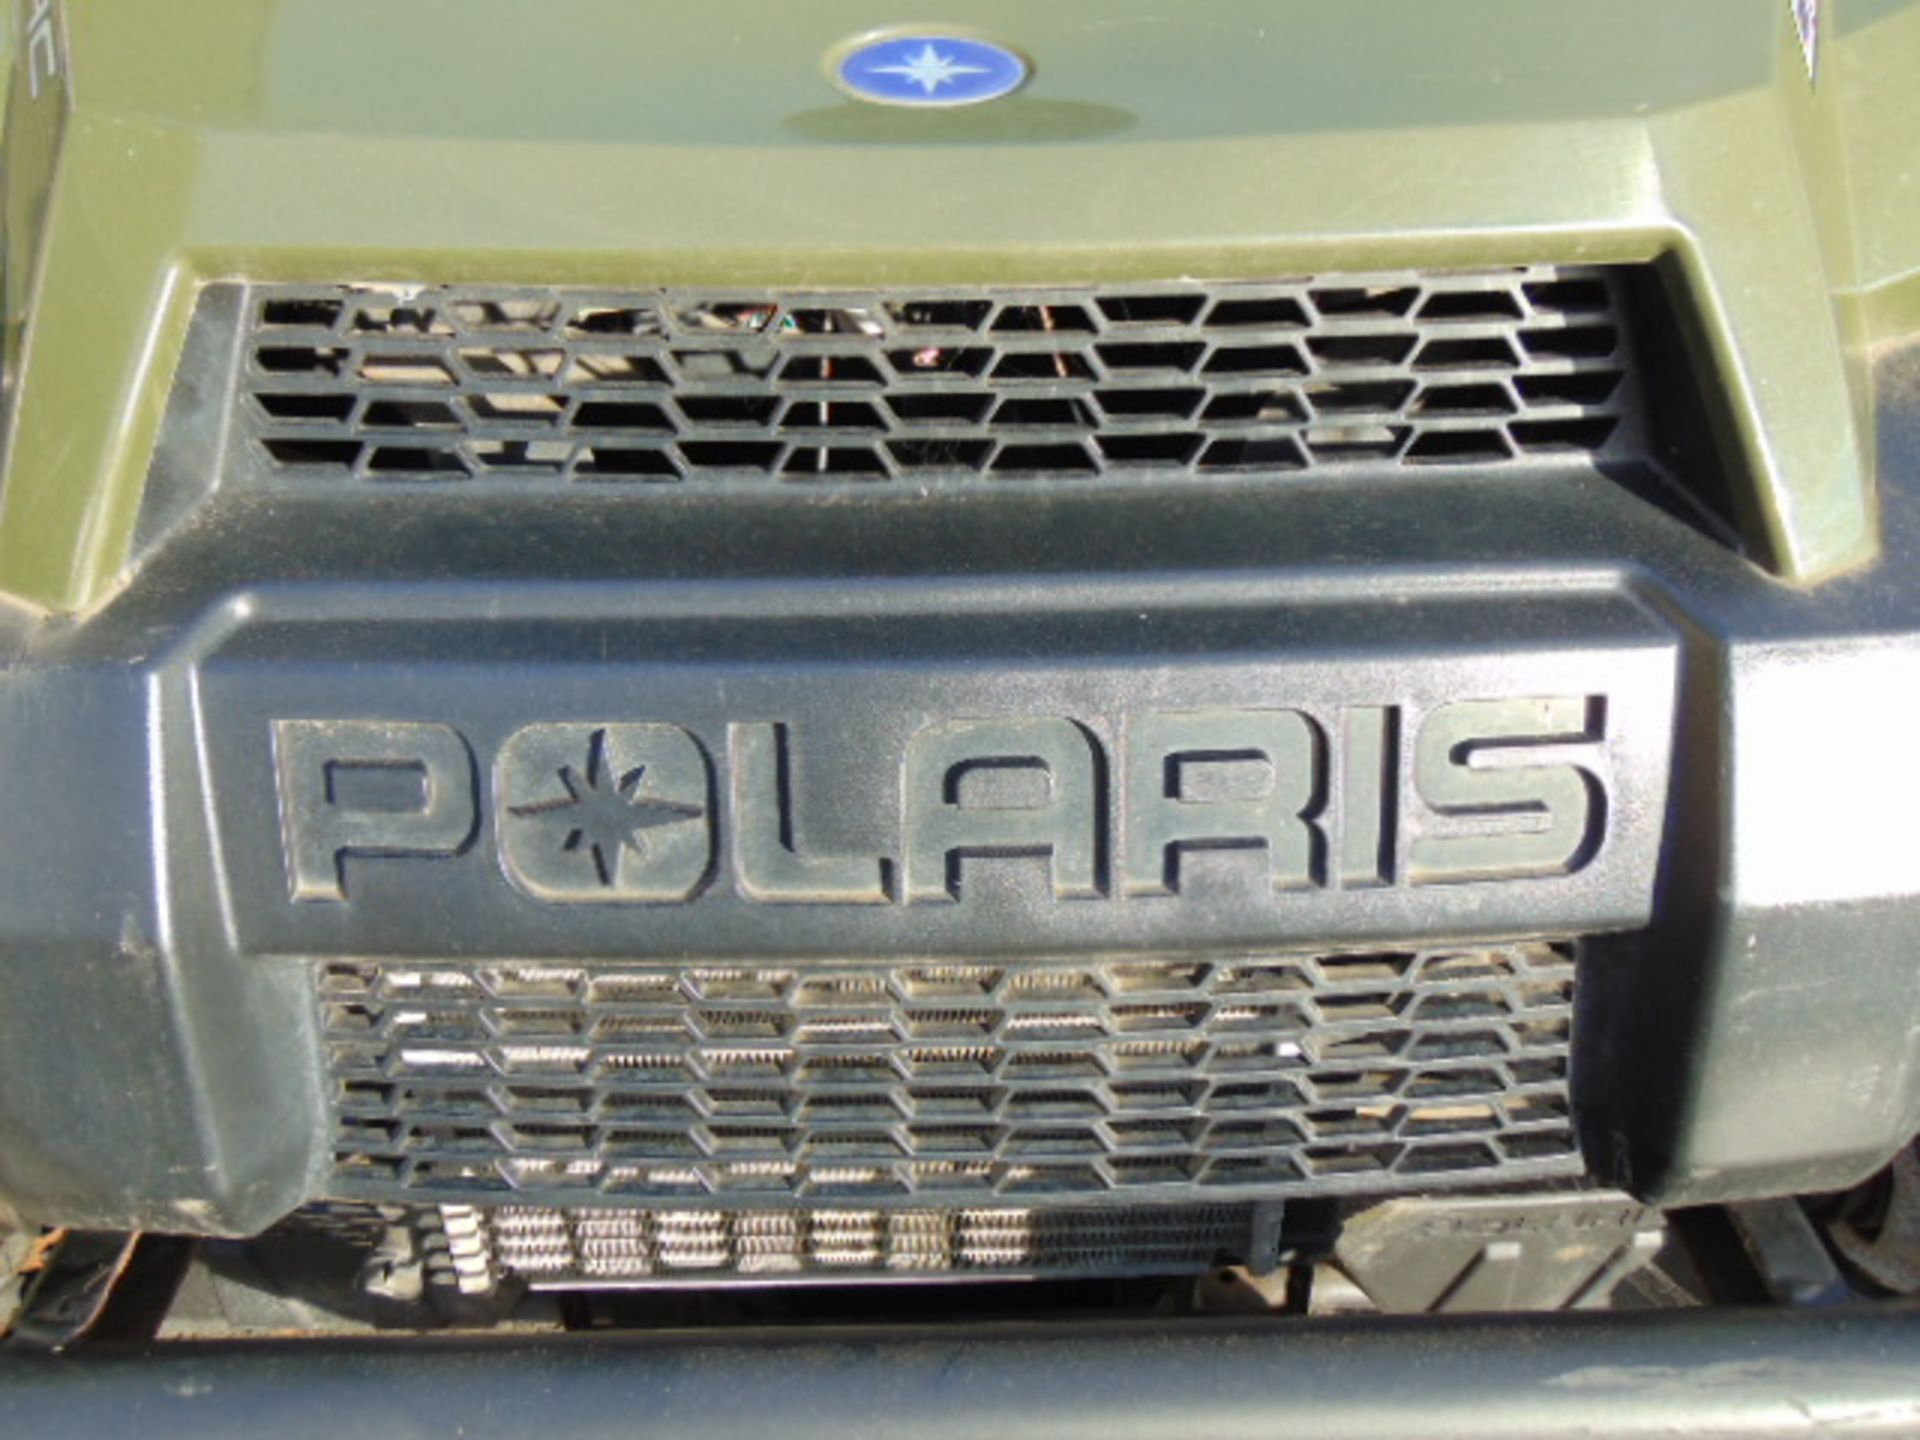 2017 Polaris Ranger 4x4 570 EFi C/W Rear Tipping Body Vendor states ONLY 183 HOURS 2000 MILES - Image 22 of 31